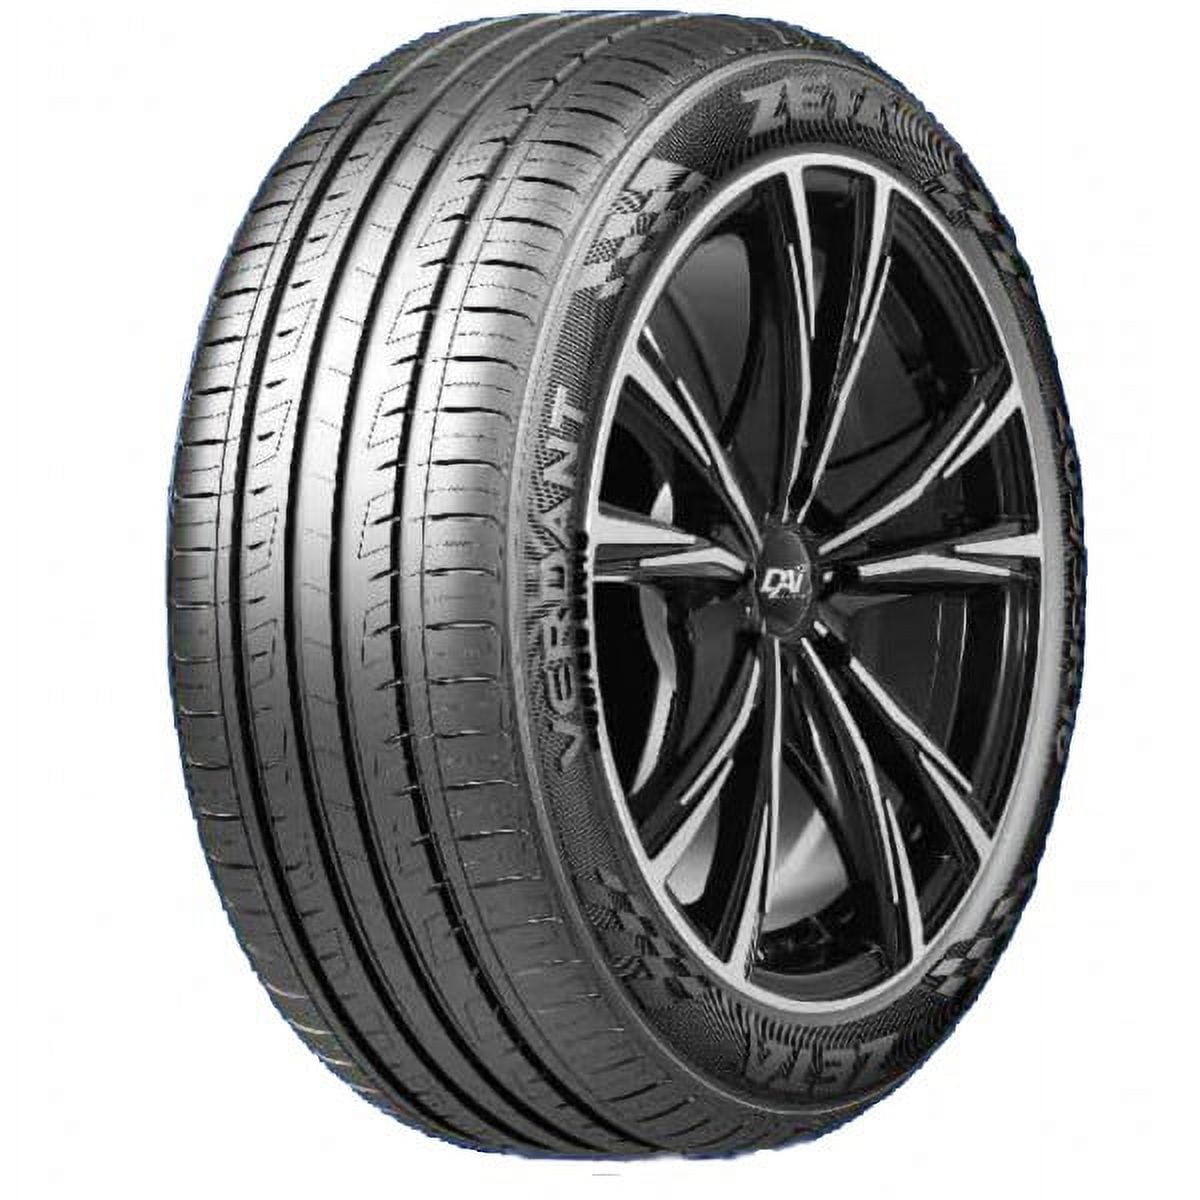 Goodyear Assurance Fuel Max H Fits: Tire Fit 2017 EV 2013-14 185/65R15 Accent Honda Hyundai 88 LE